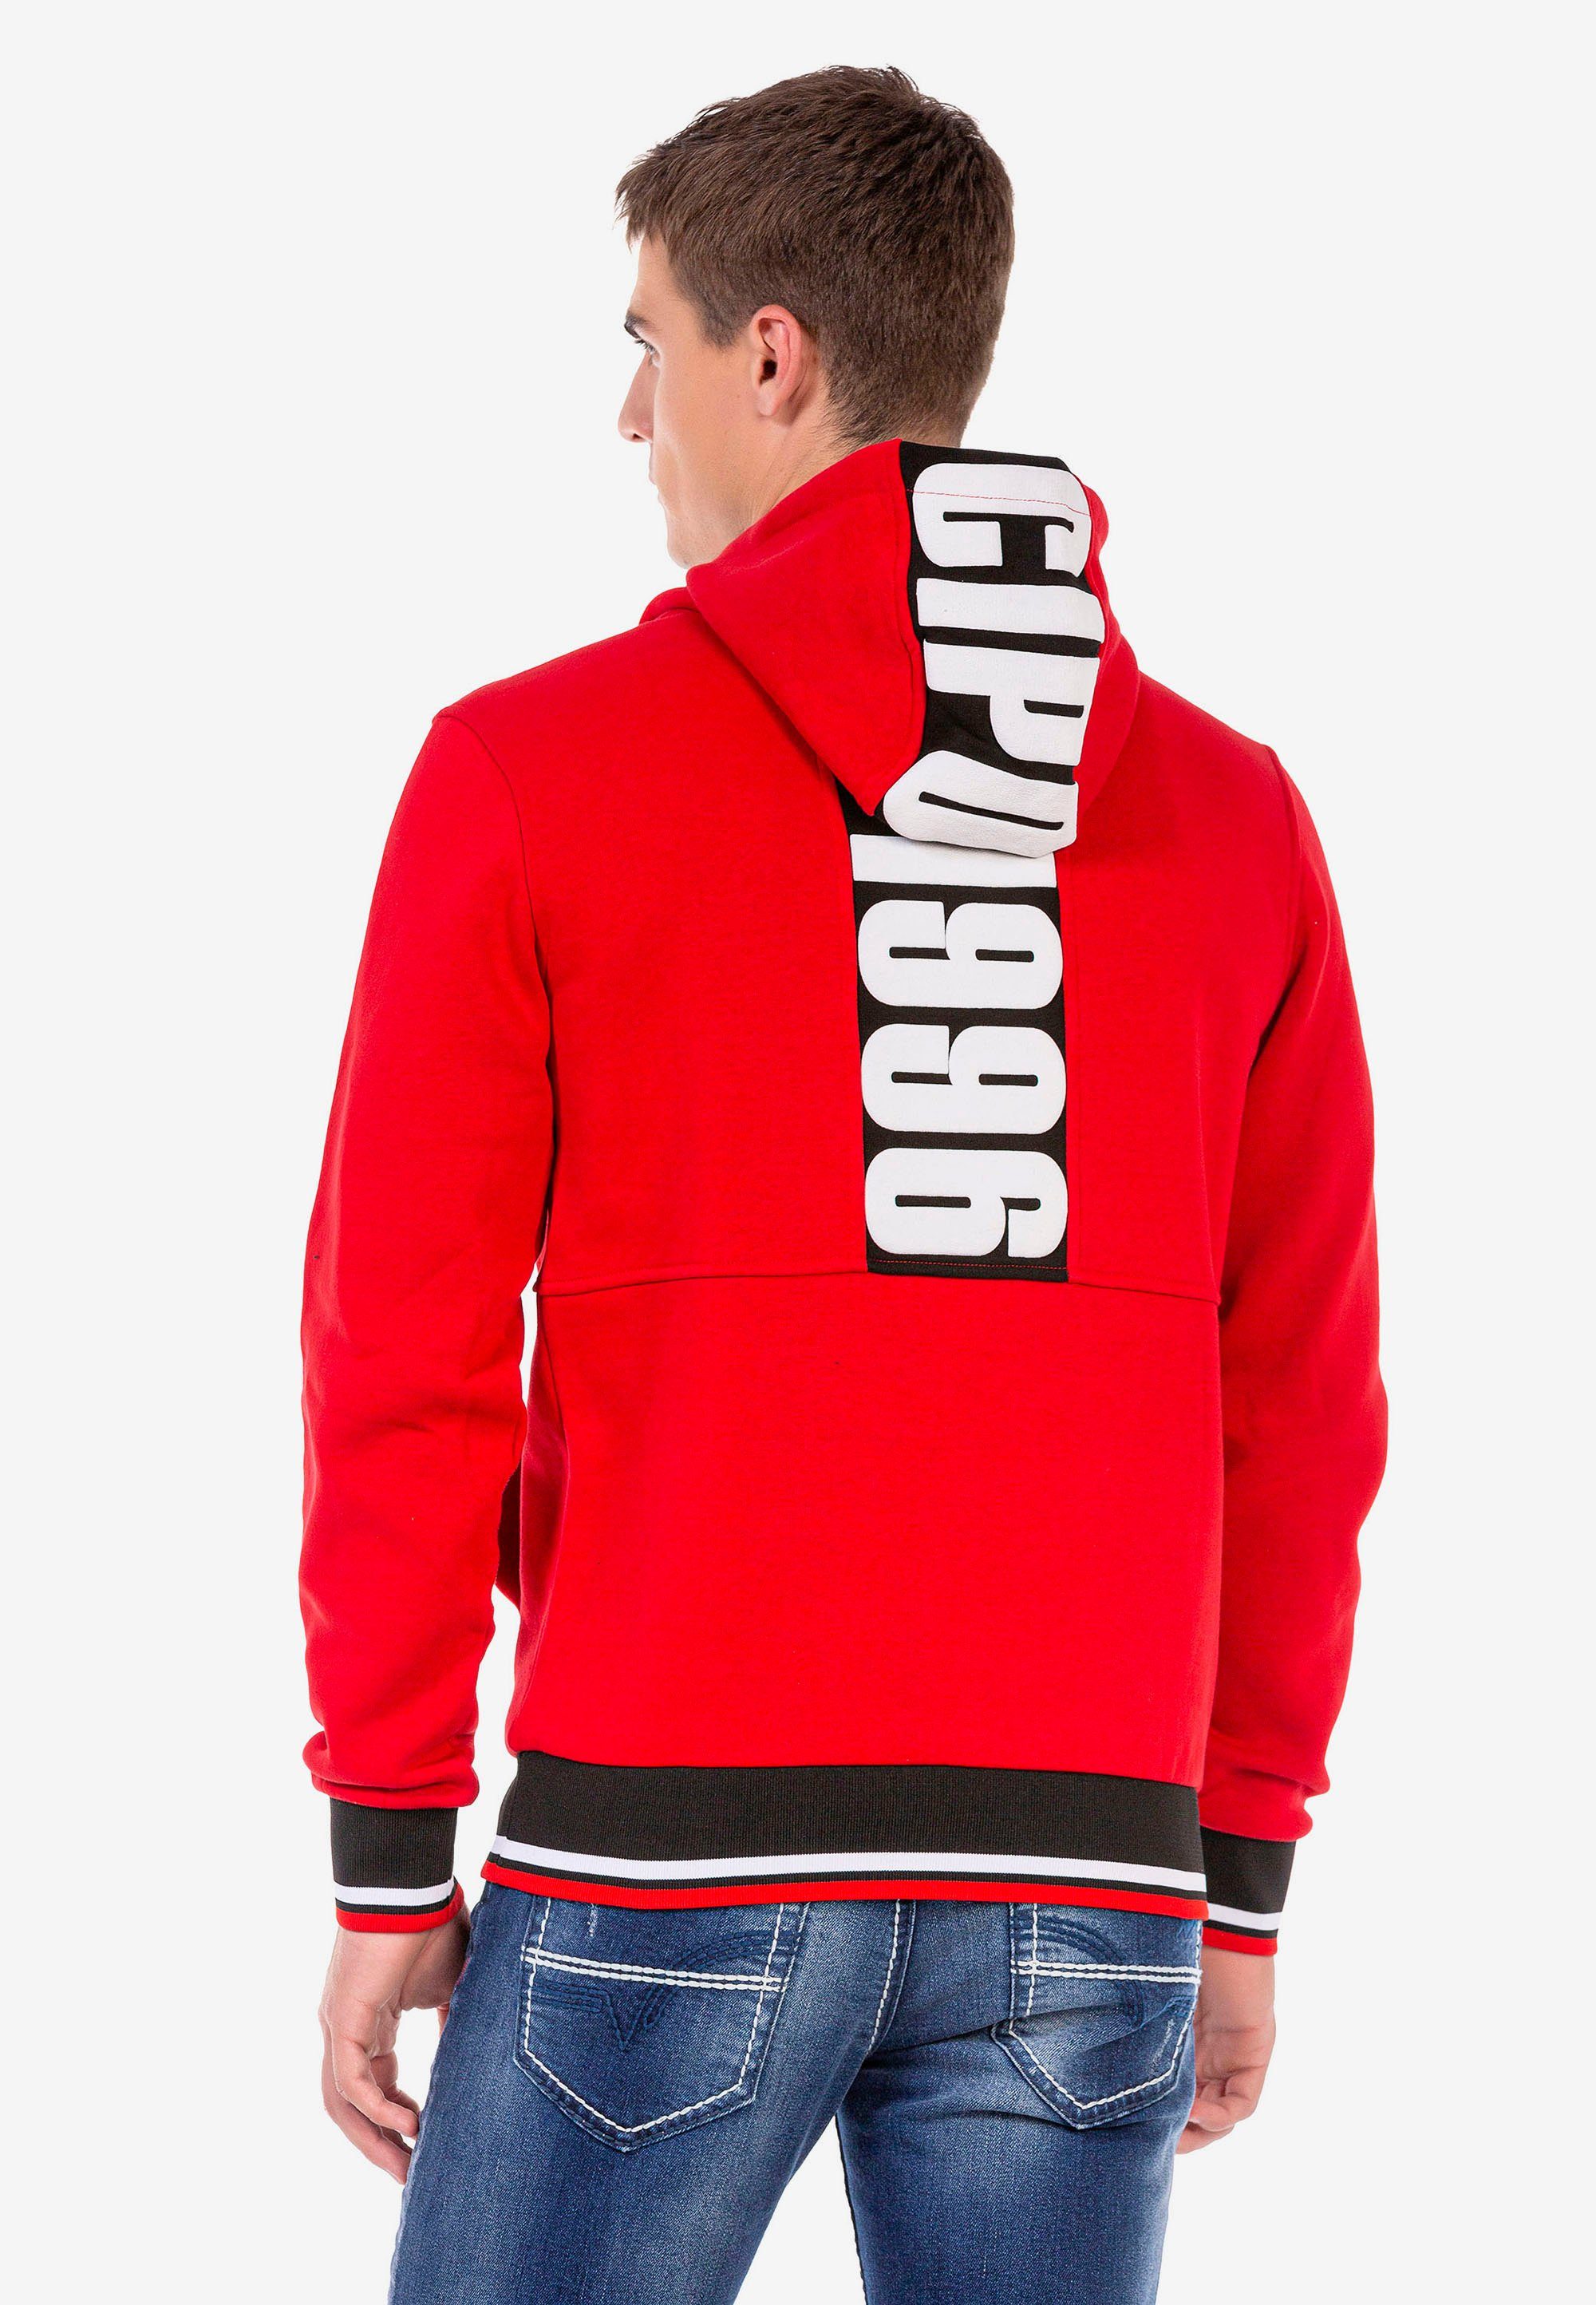 Baxx Markenprints Cipo rot mit Kapuzensweatshirt & tollen